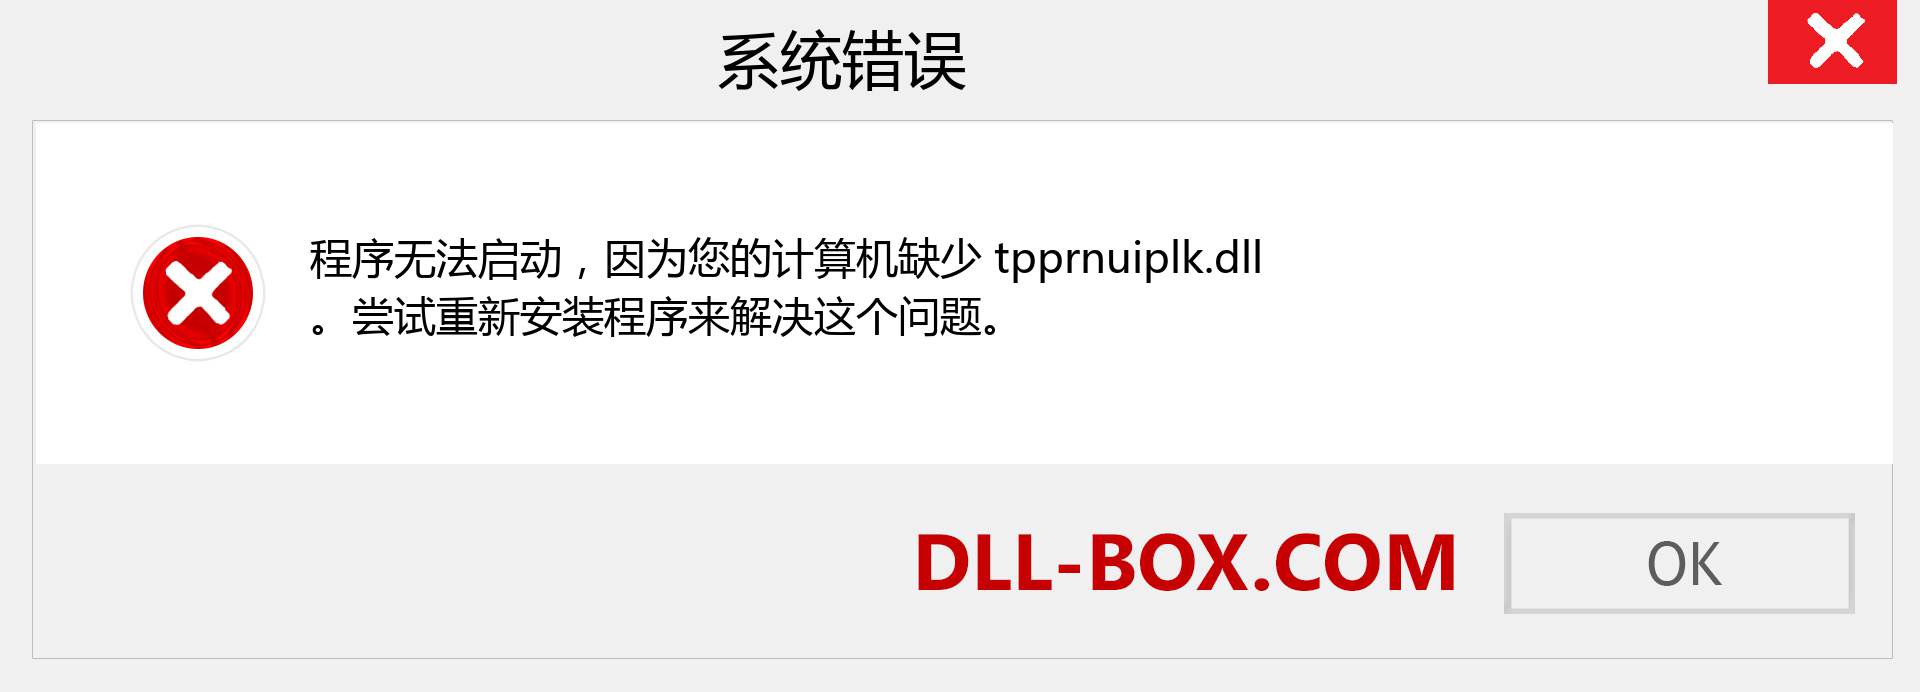 tpprnuiplk.dll 文件丢失？。 适用于 Windows 7、8、10 的下载 - 修复 Windows、照片、图像上的 tpprnuiplk dll 丢失错误